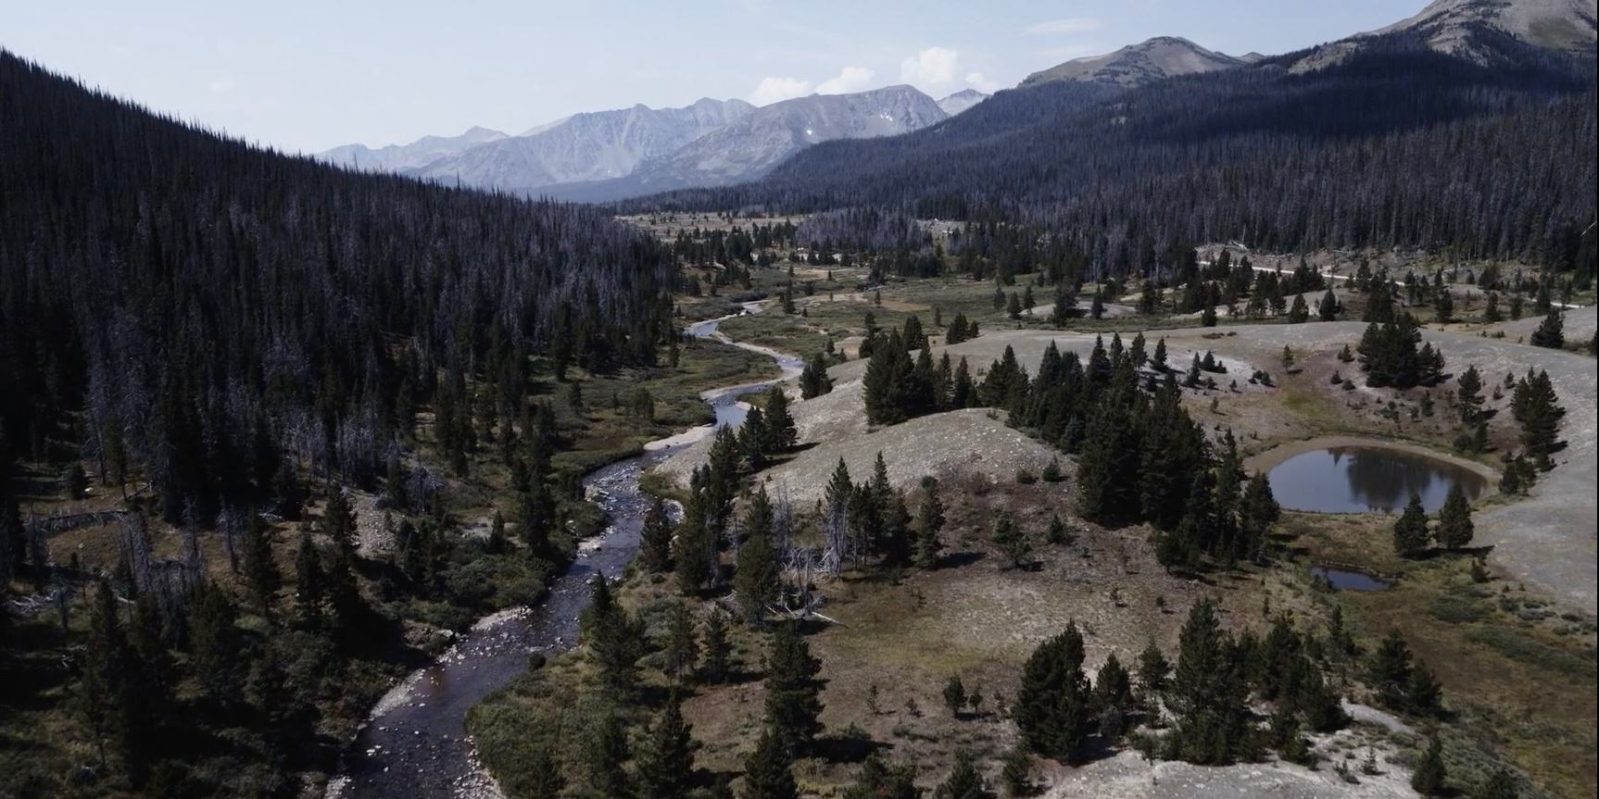 DroneRise - DJI Inspire 2 and Zenmuse X7 combo capture Colorado landscape